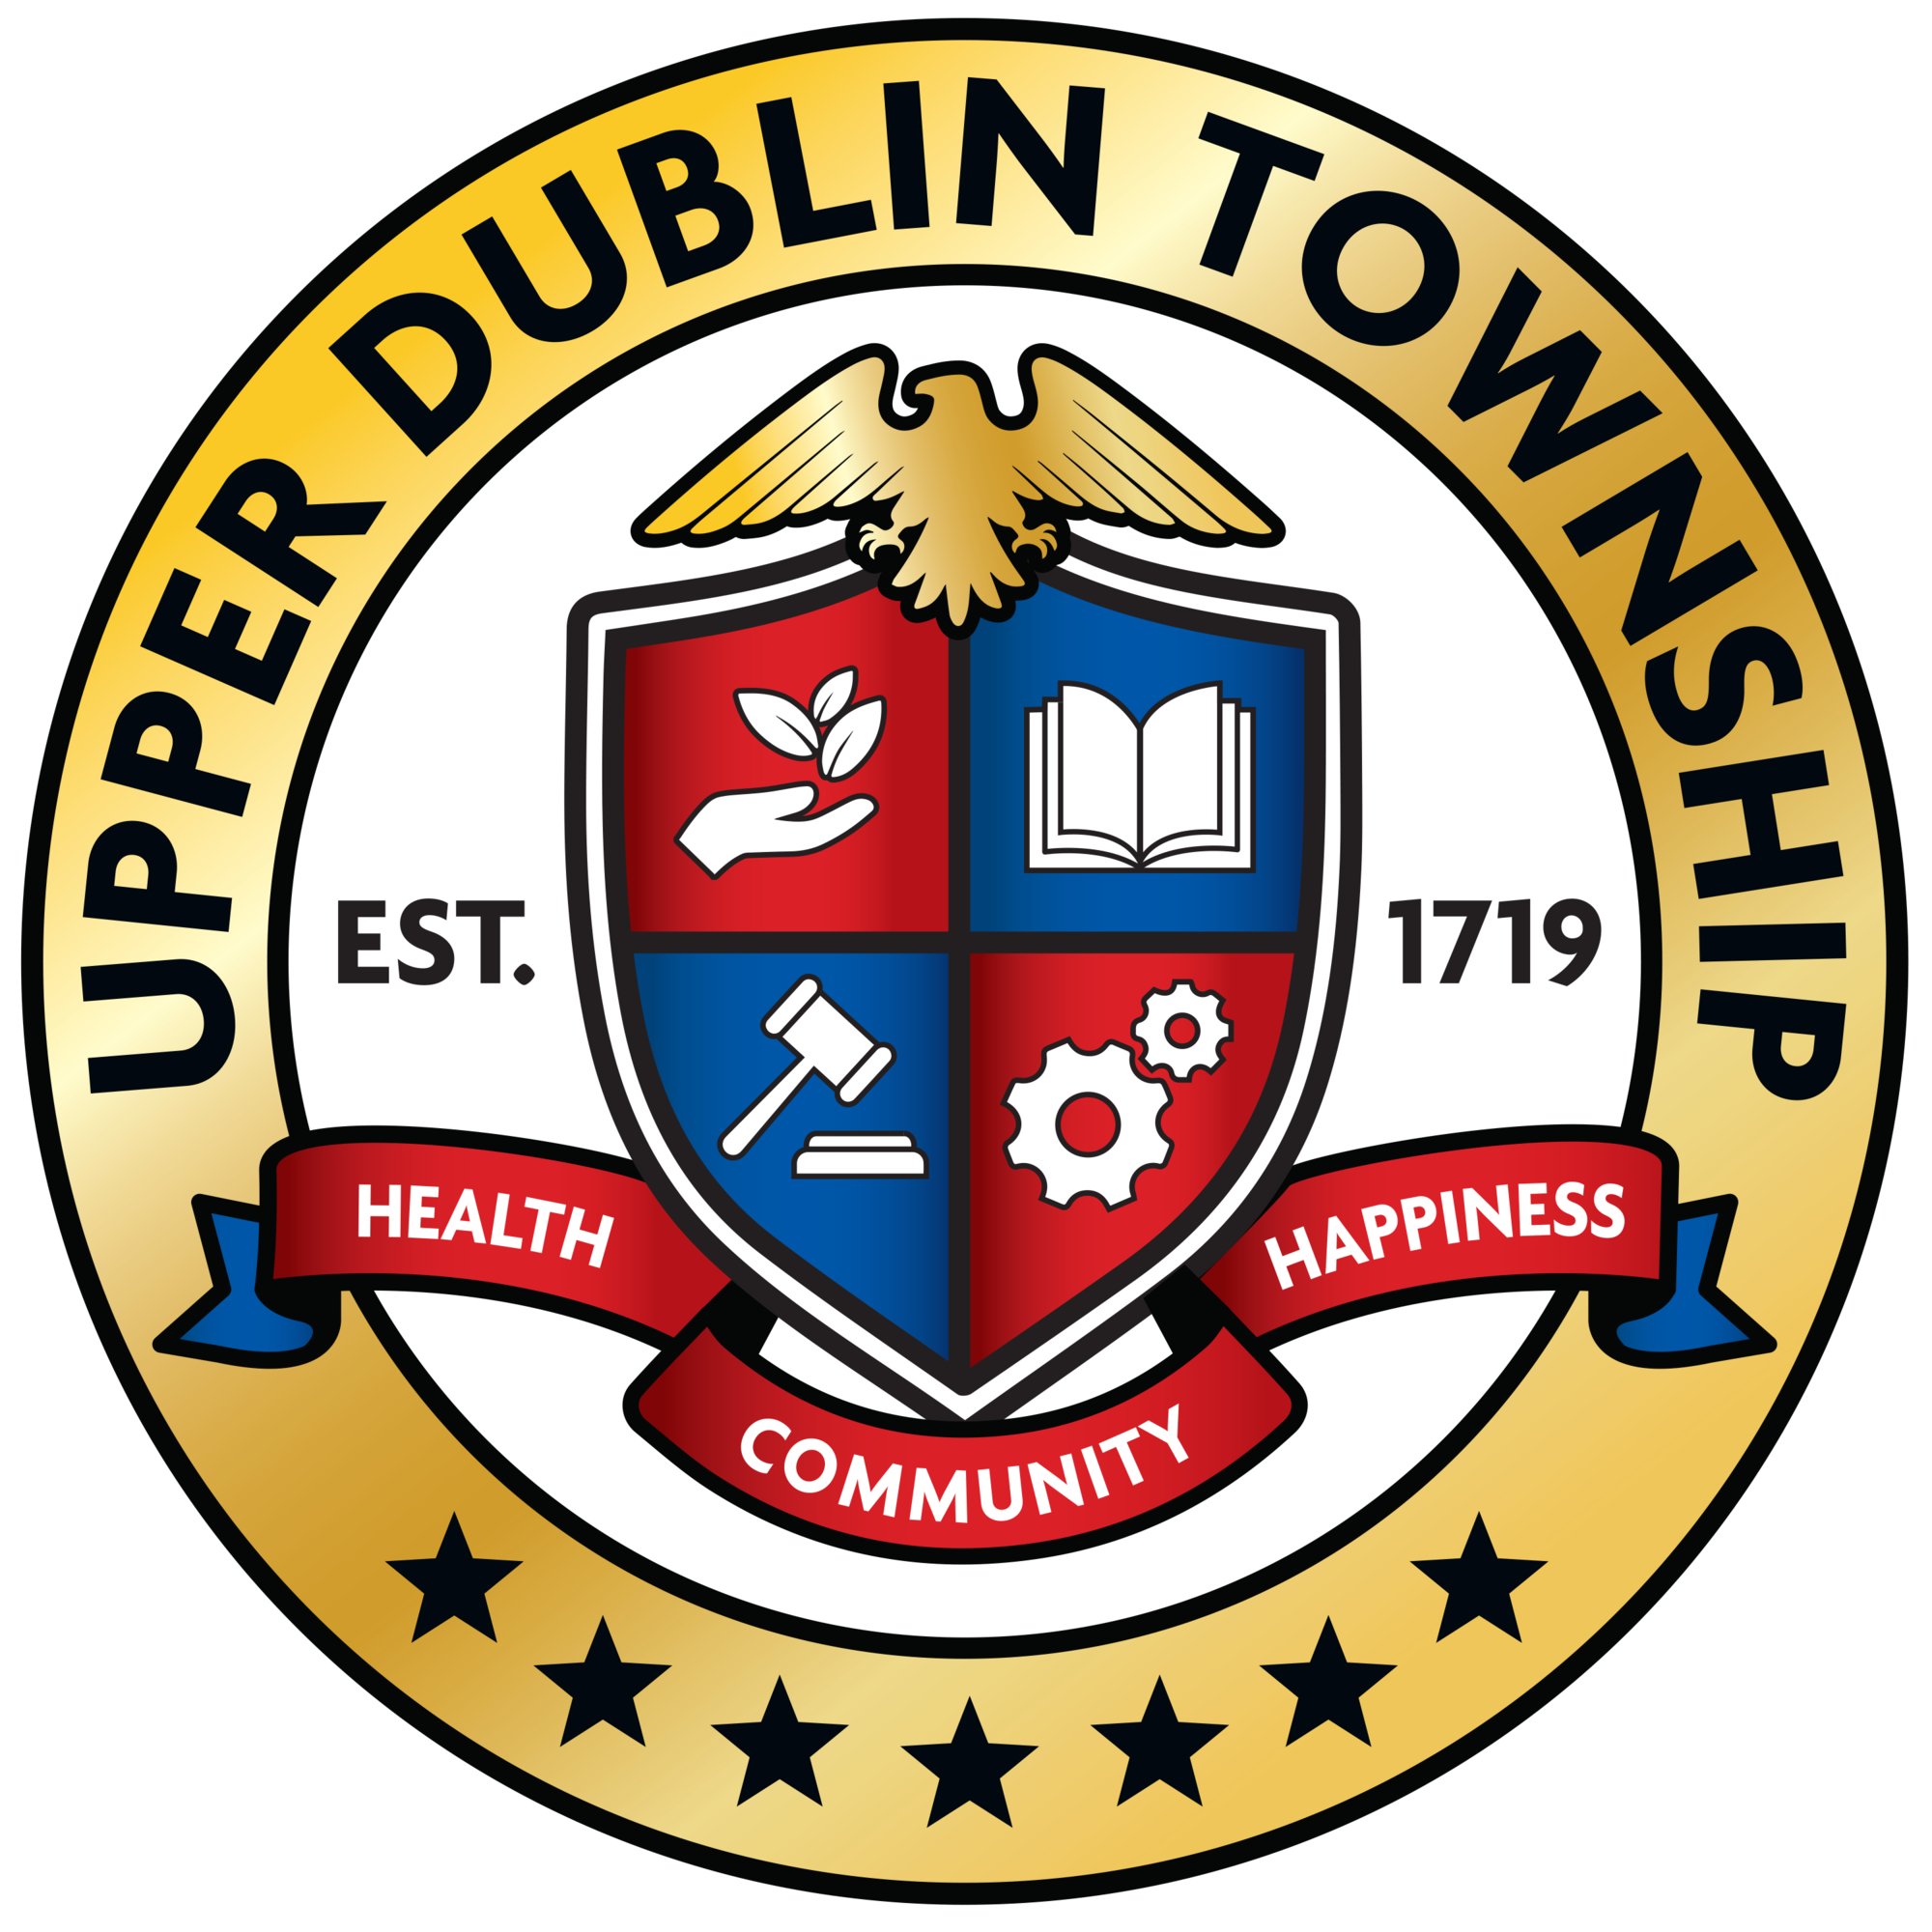 The Township of Upper Dublin